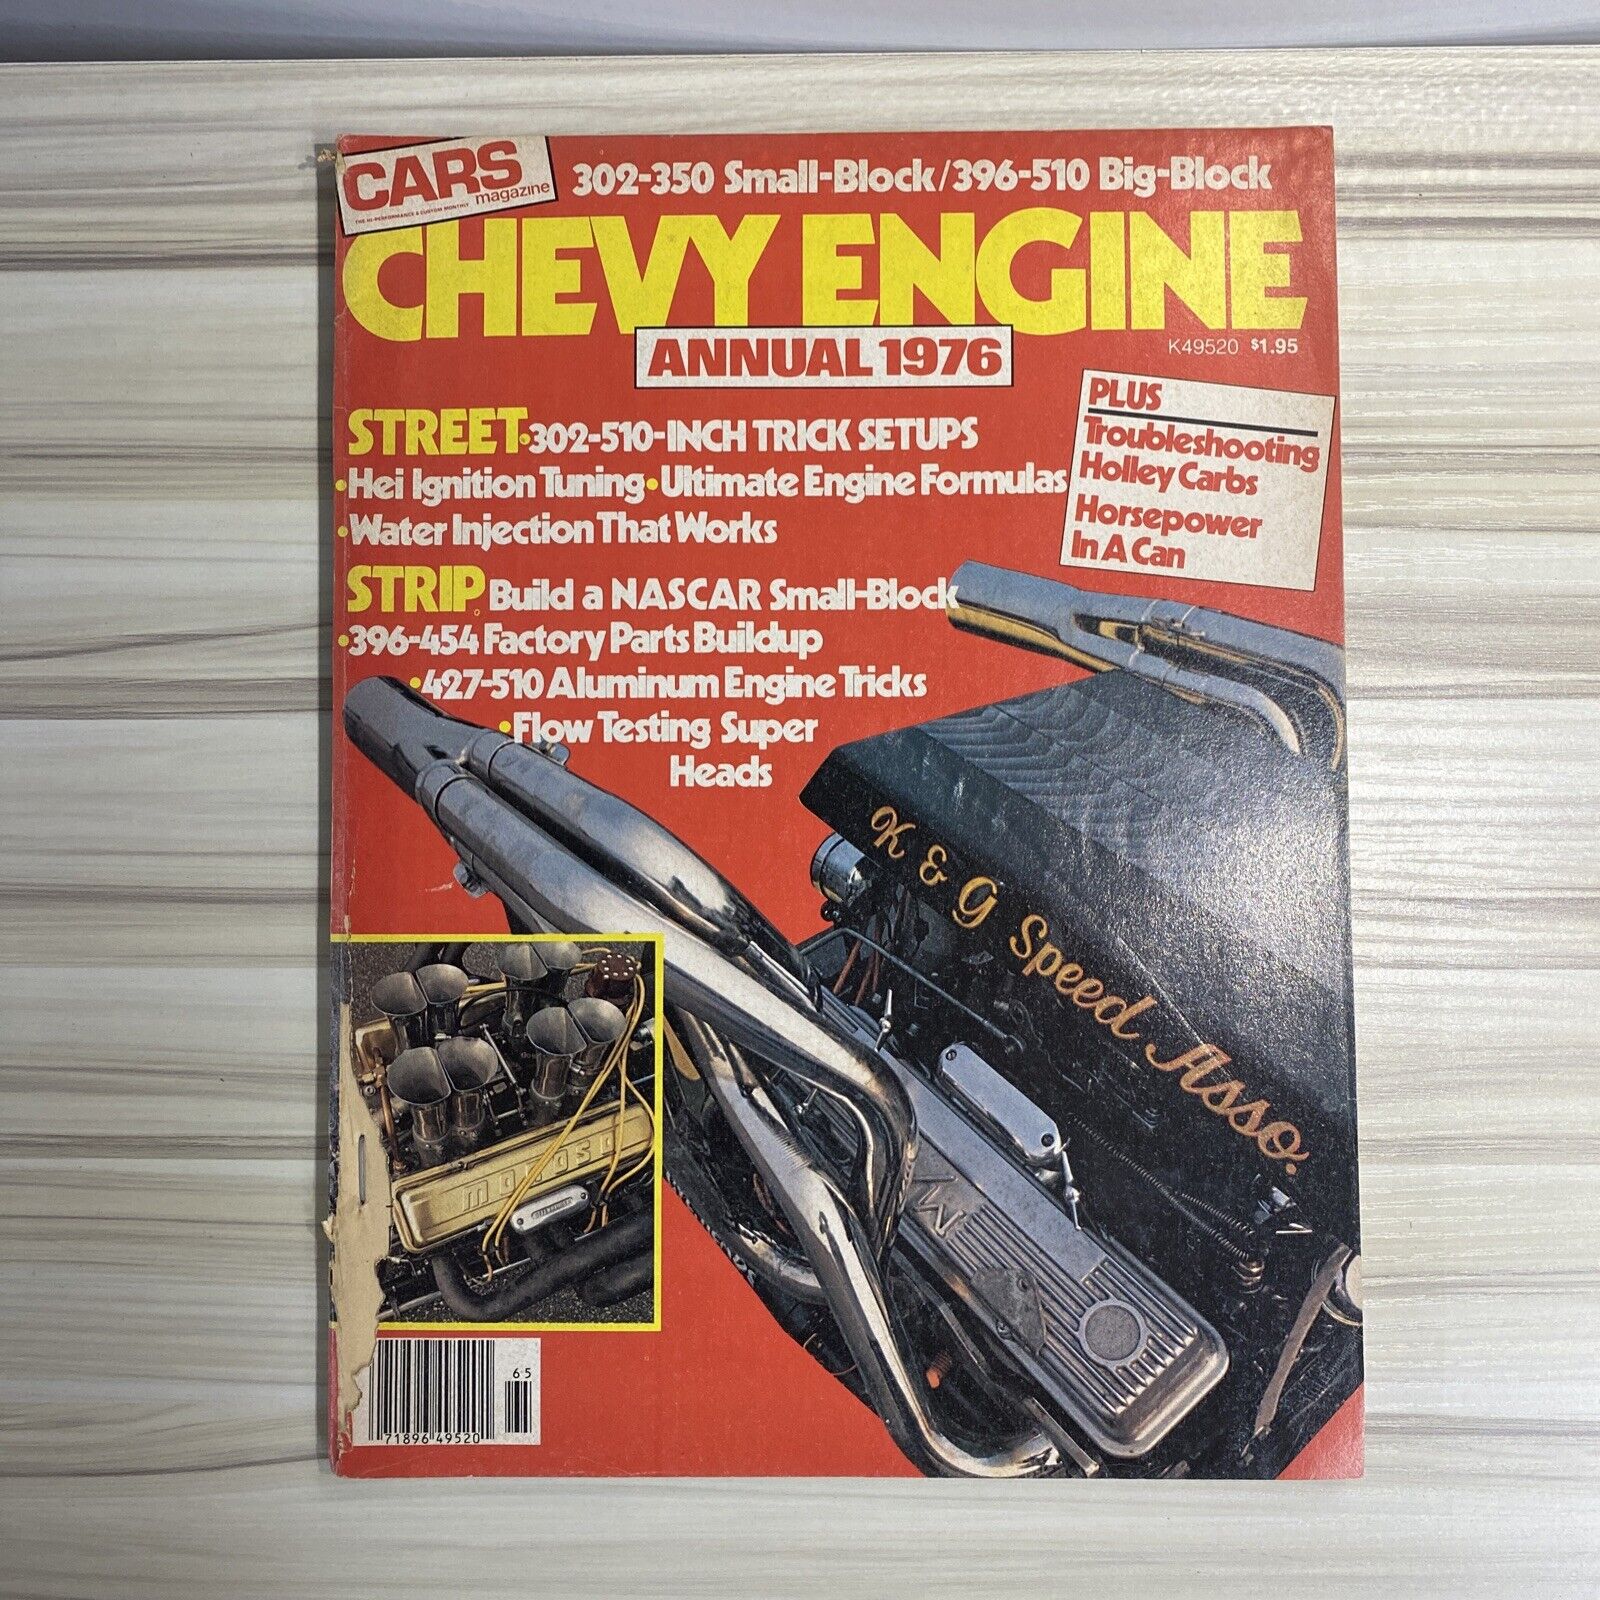 Chevy Engine Annual 1976 - Cars Magazine - Street - Race - Tech  - K49520